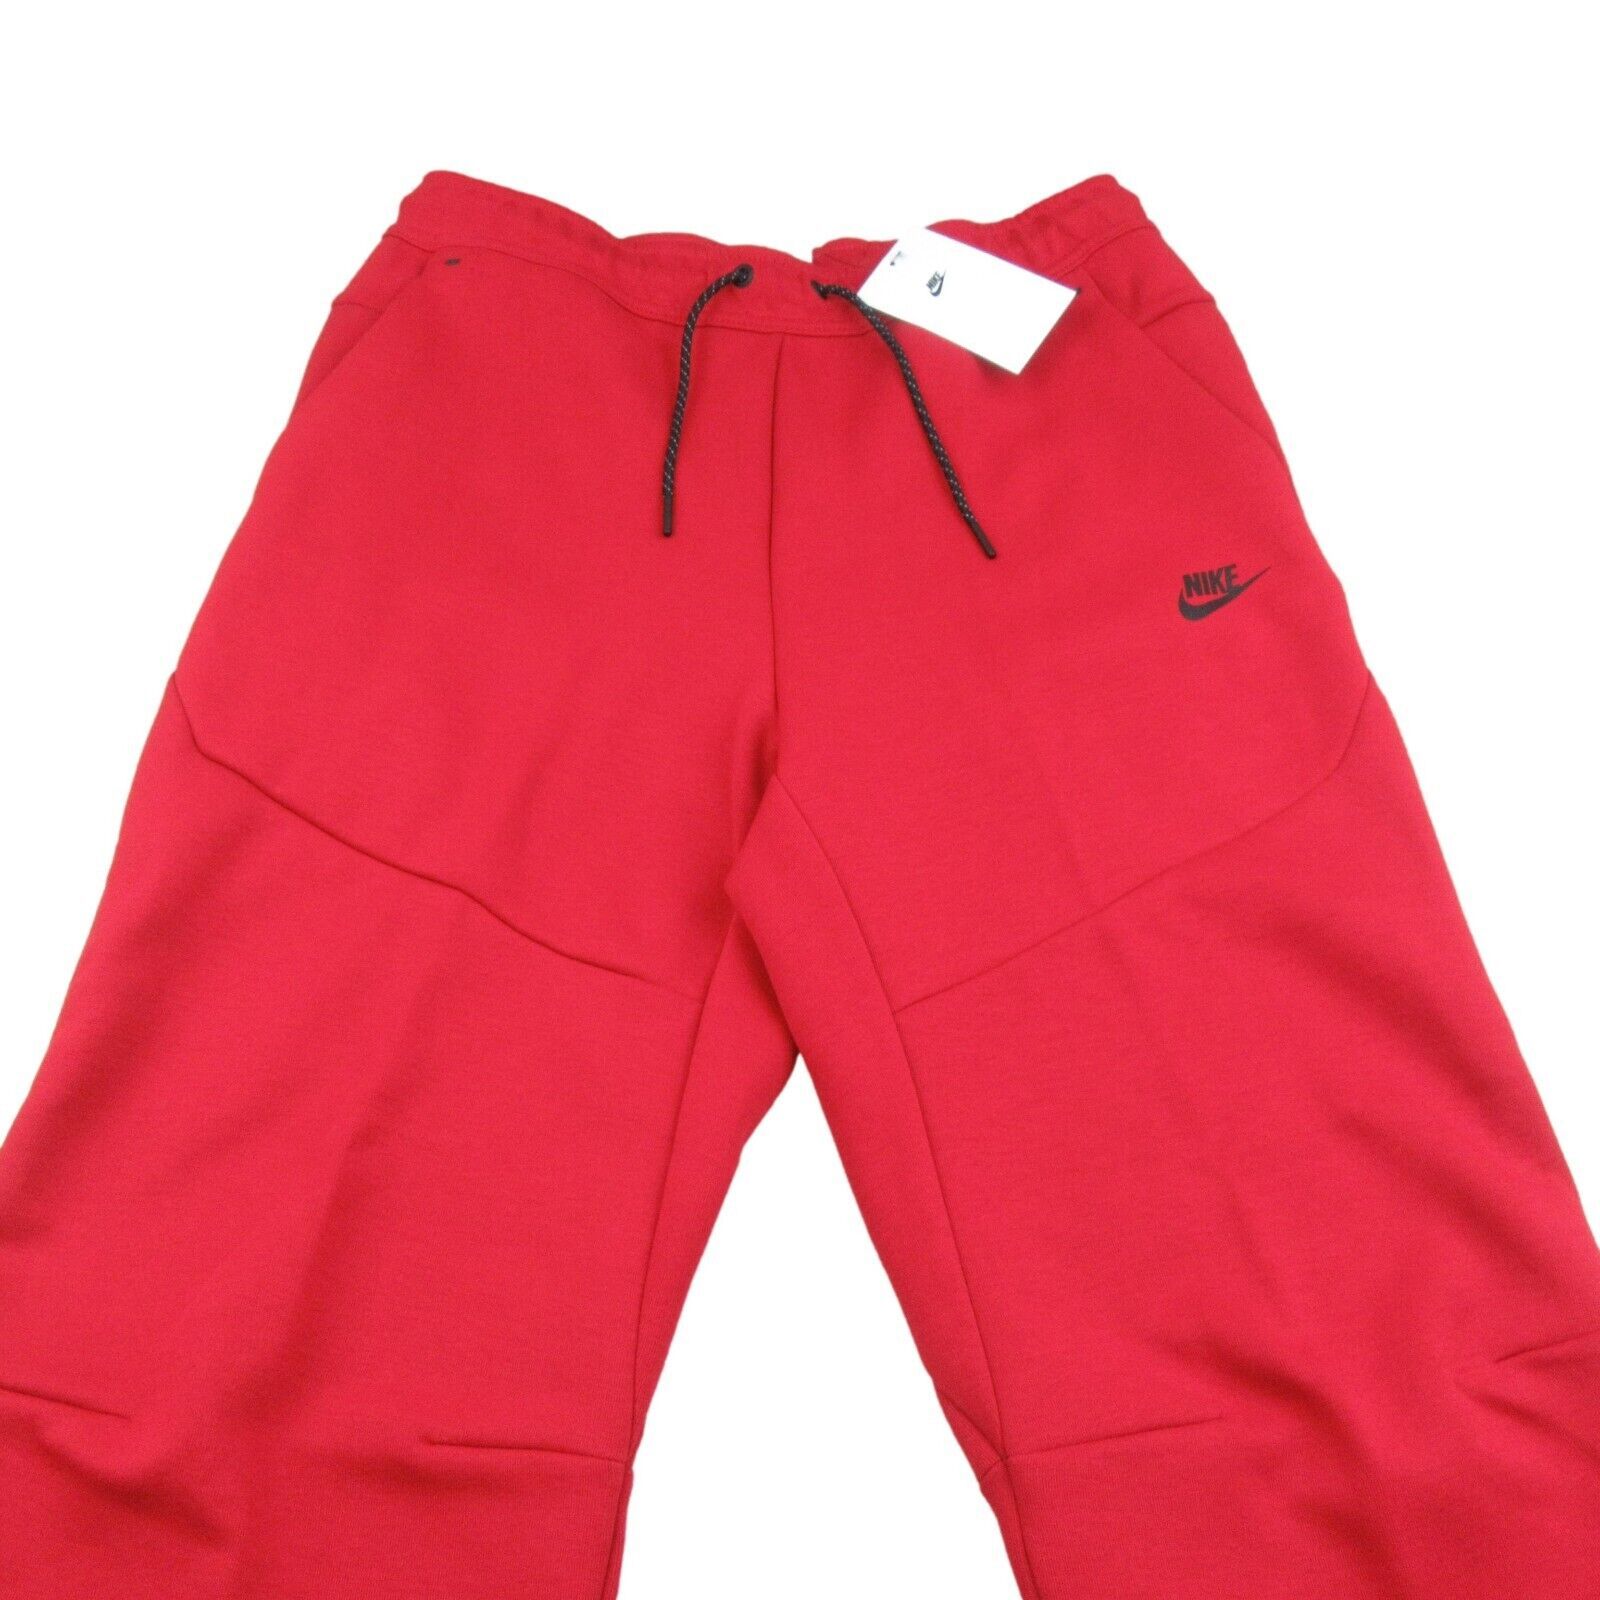 Primary image for Nike Sportswear Tech Fleece Jogger Pants Men's Size XXL Gym Red NEW CU4495-687